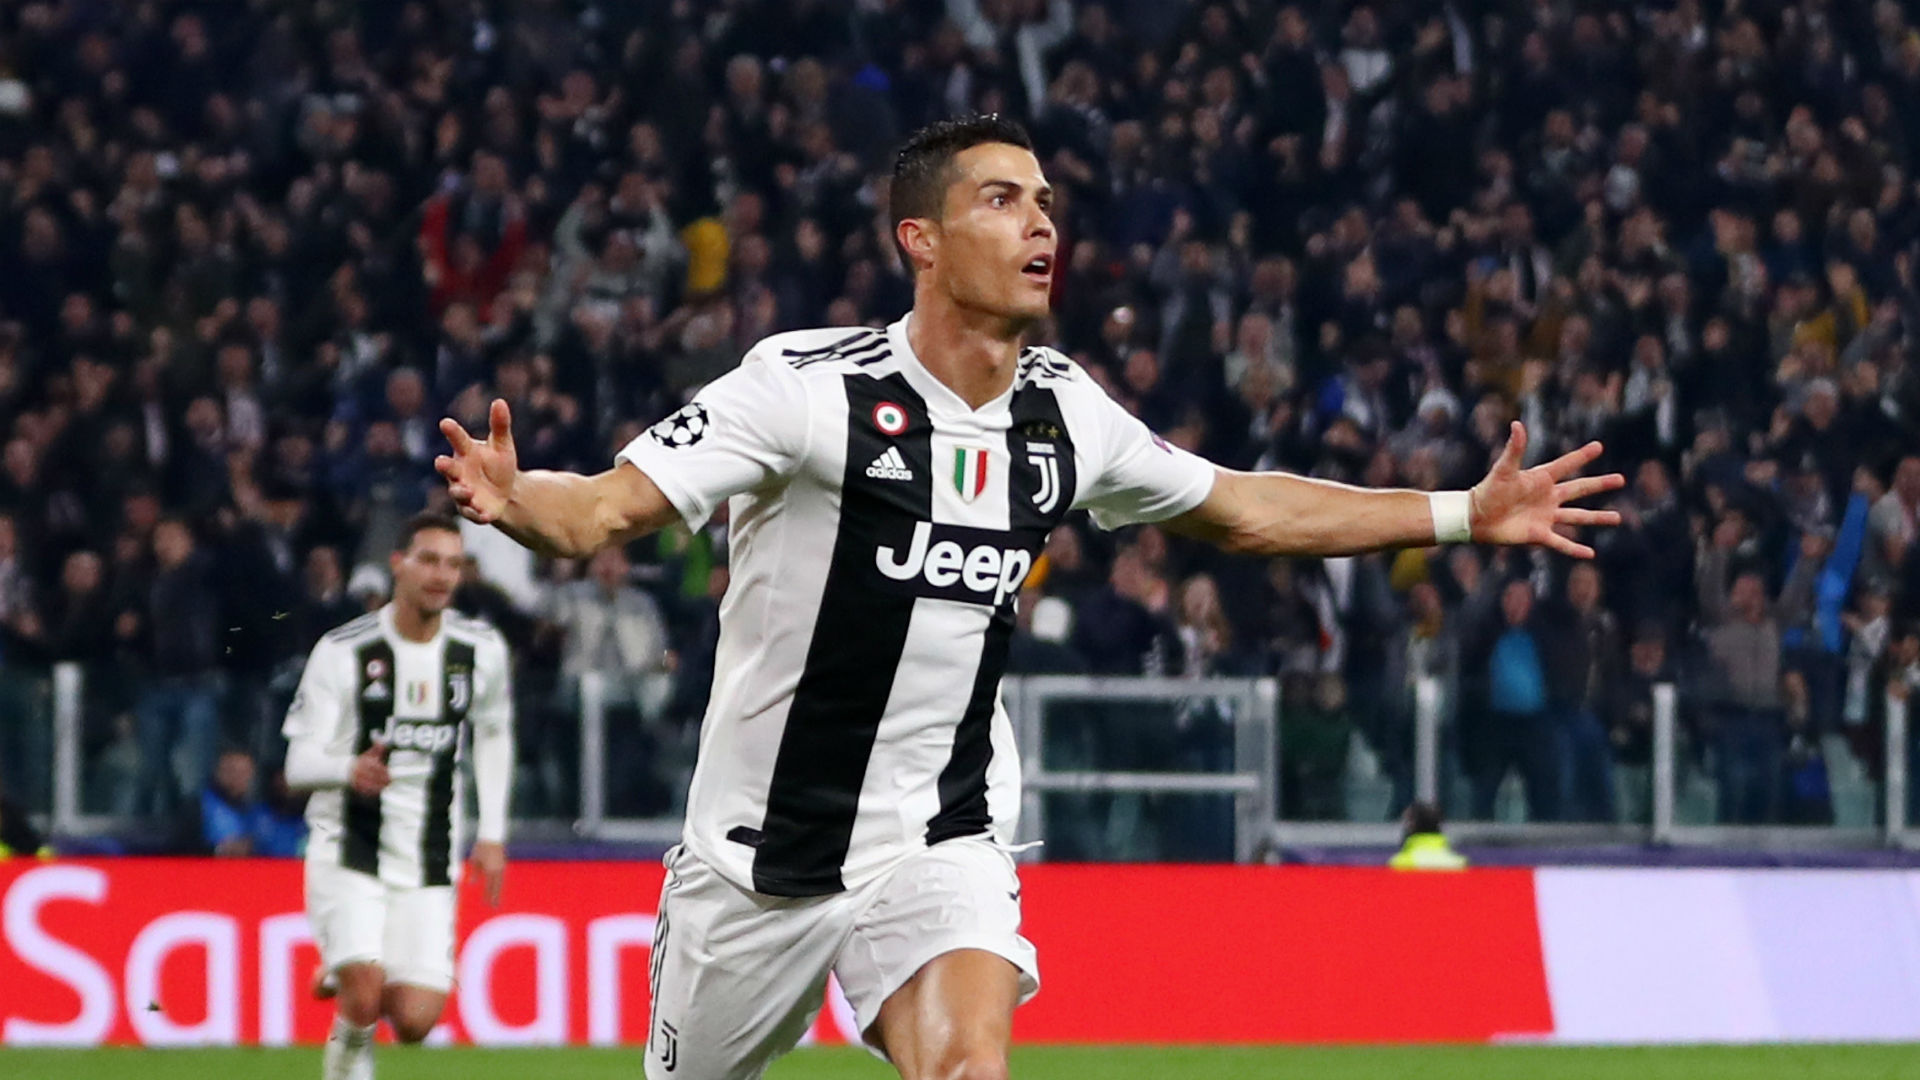 Cristiano Ronaldo (Juventus), scoring against former club, Manchester United 